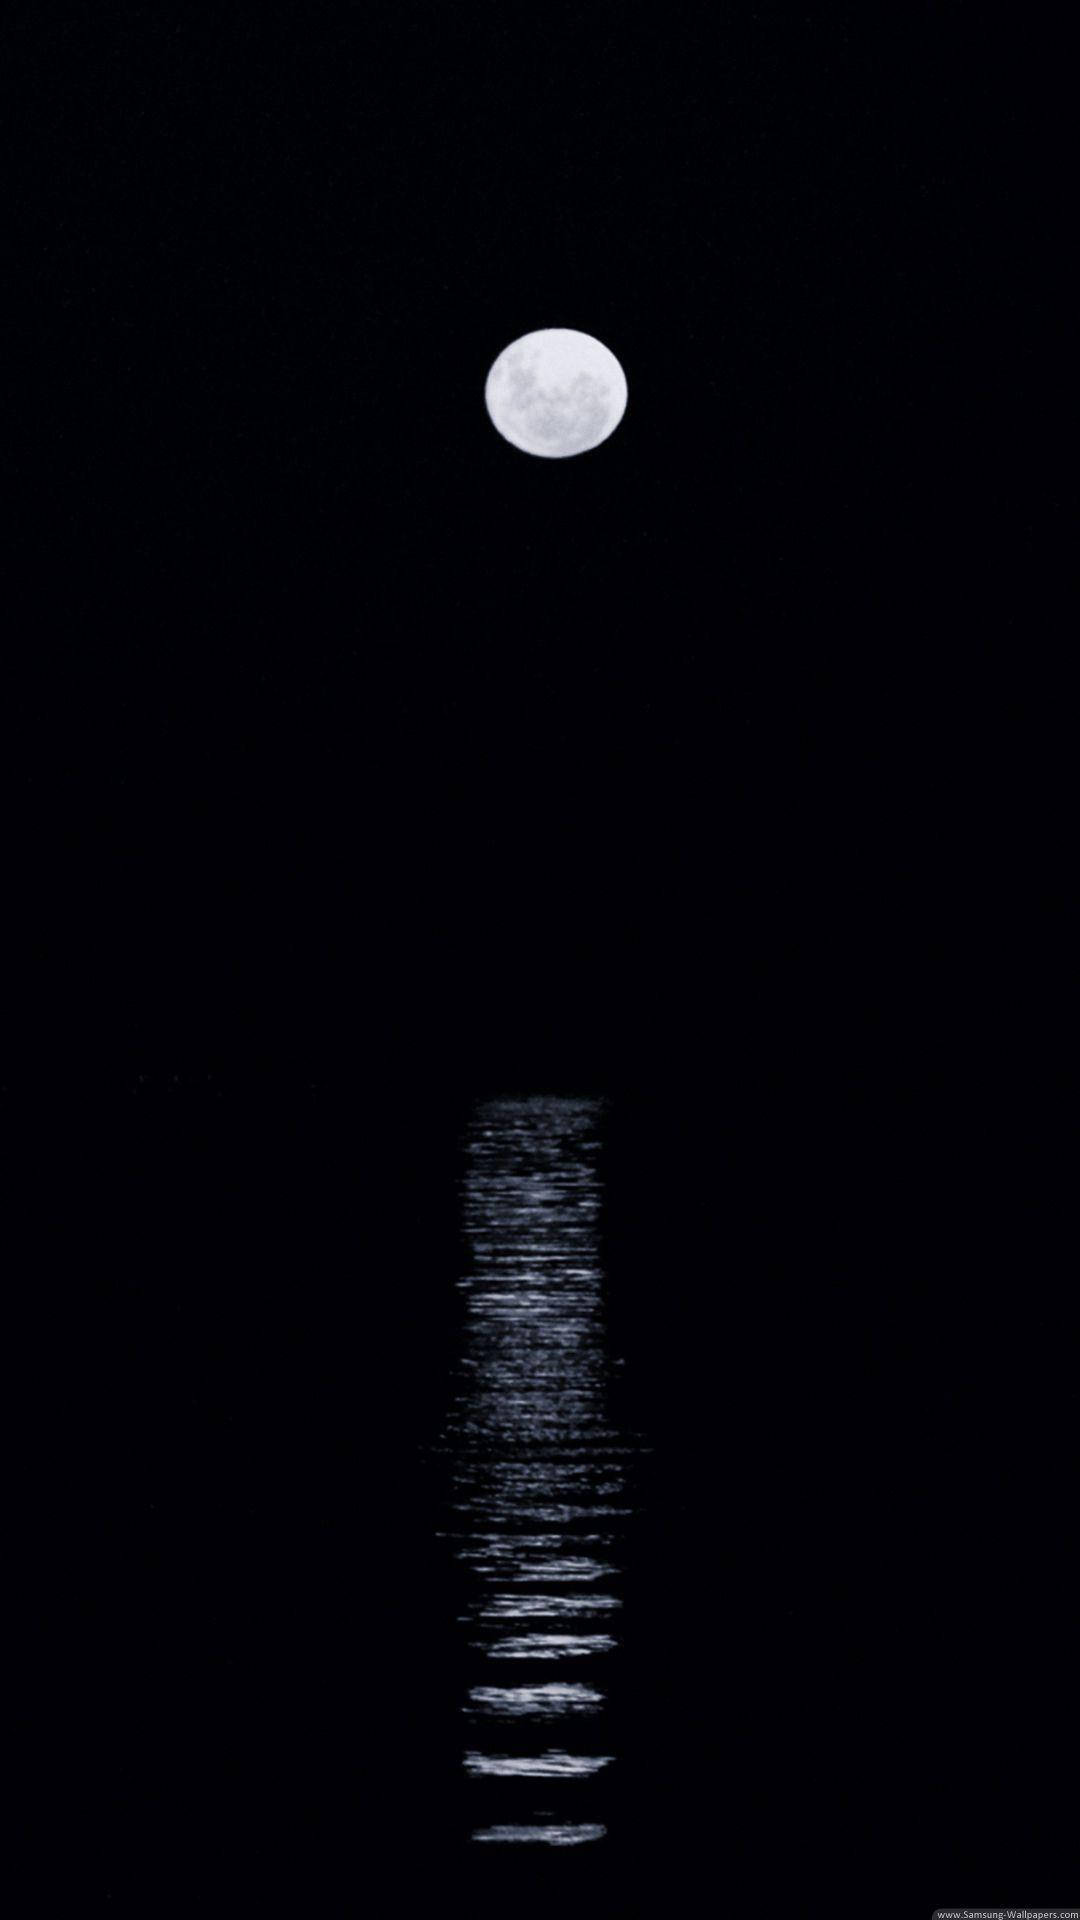 Caption: Mystical Full Moon In Dark Sky